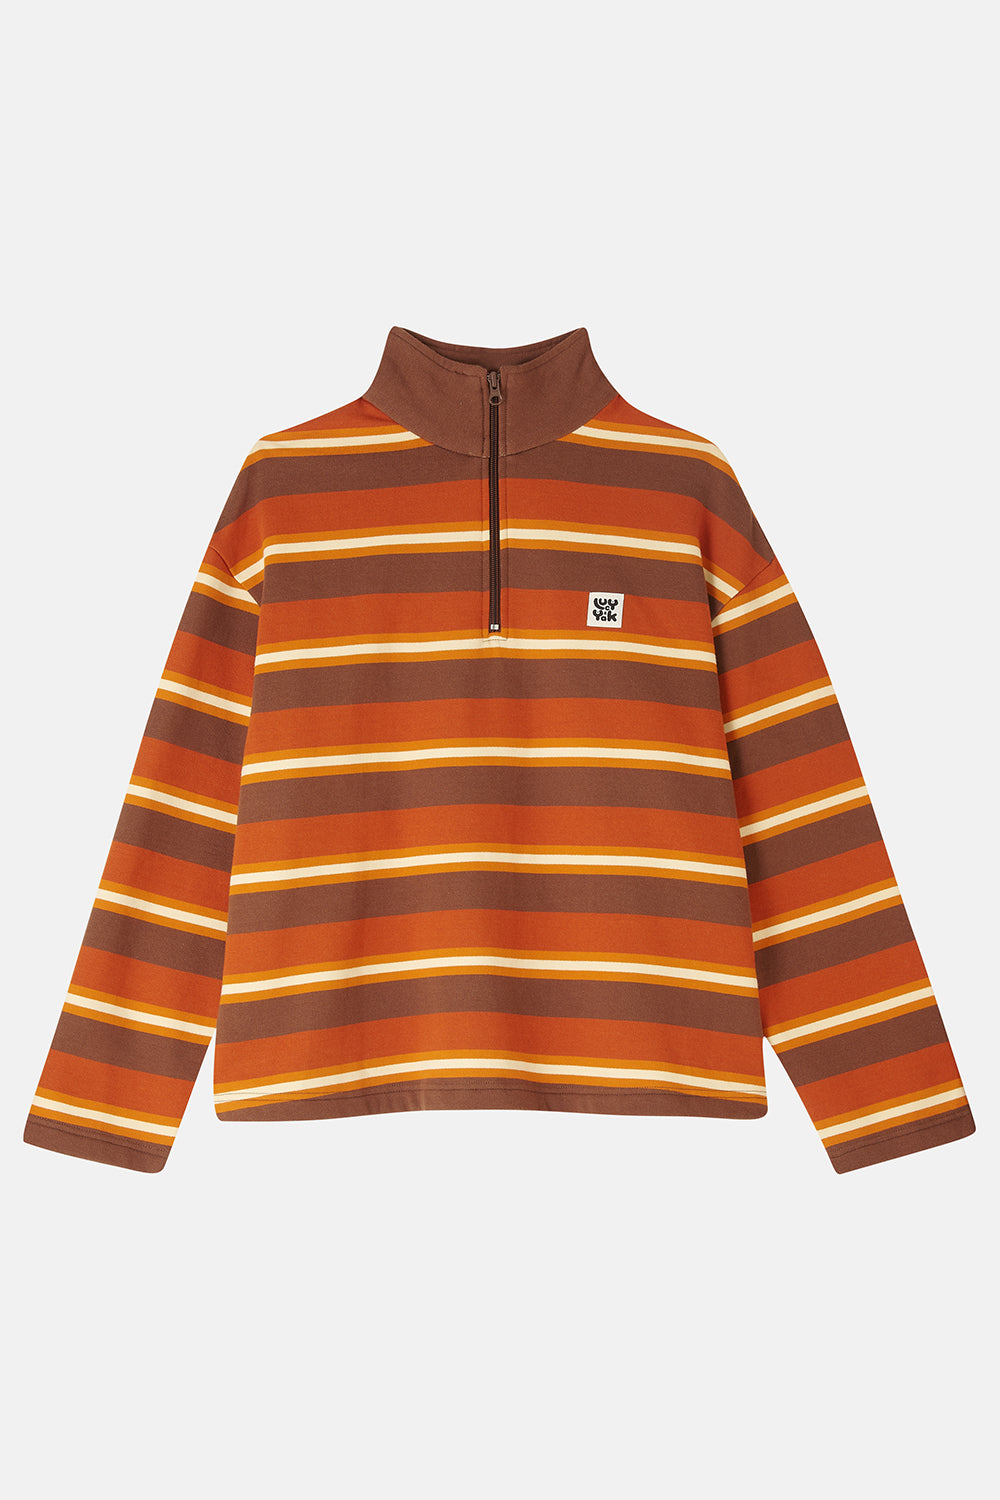 Taylor Sweater: ORGANIC COTTON - Brown & Orange Rust